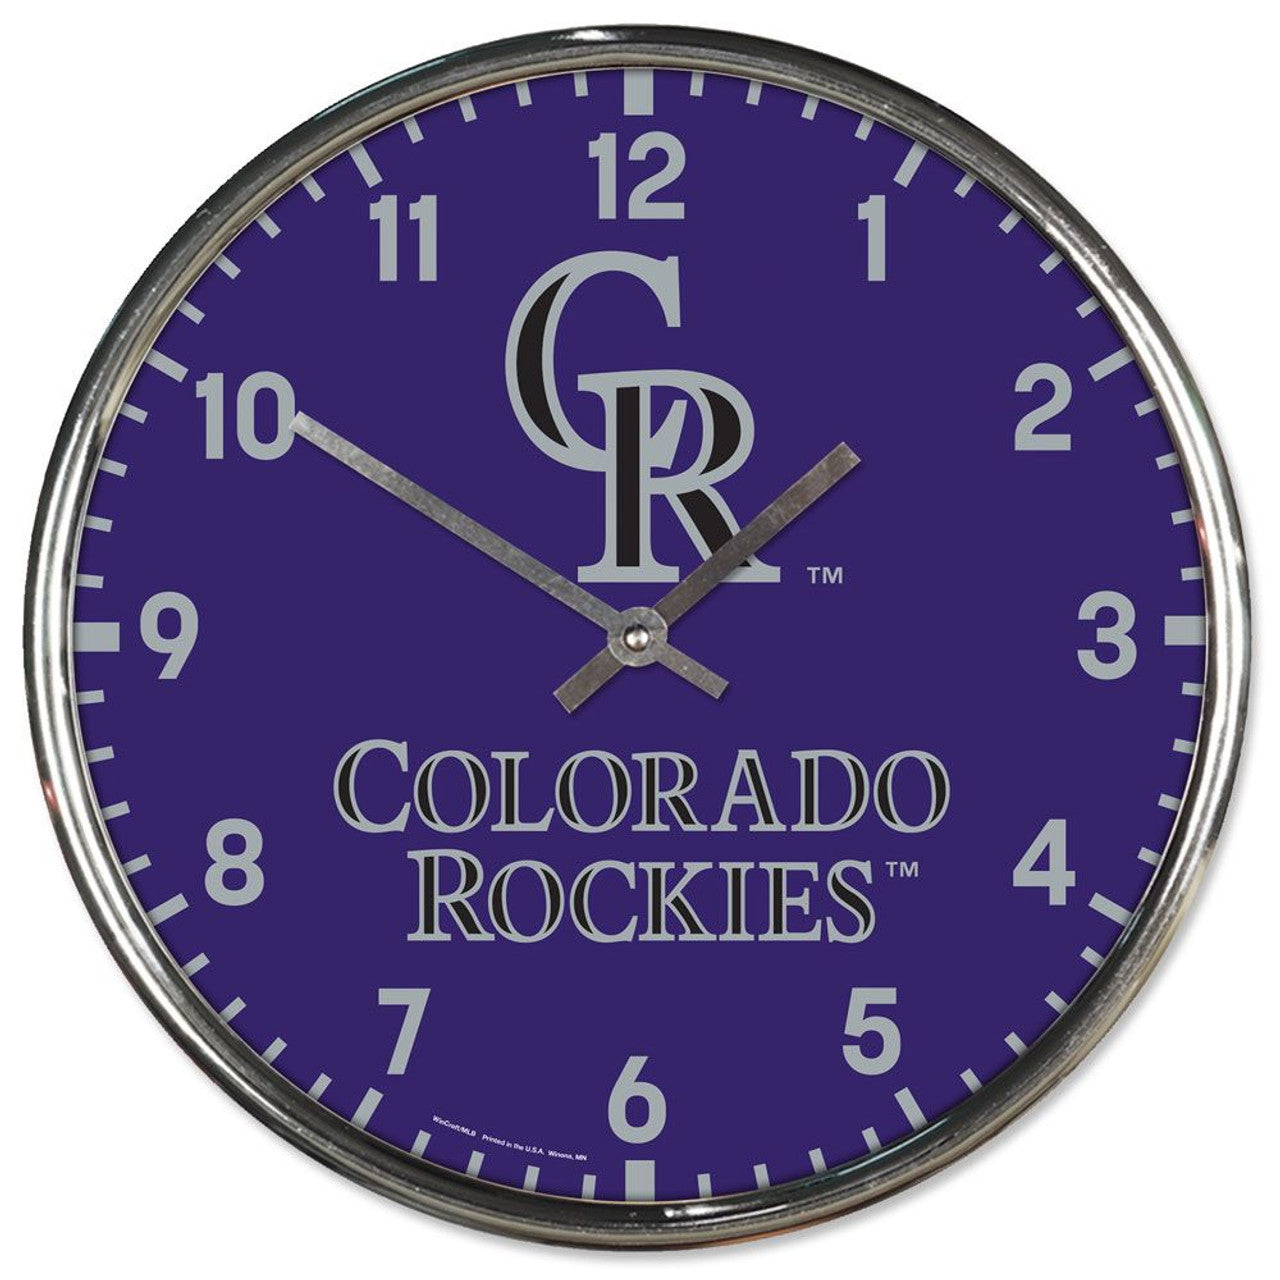 Colorado Rockies 12" Round Chrome Wall Clock by Wincraft